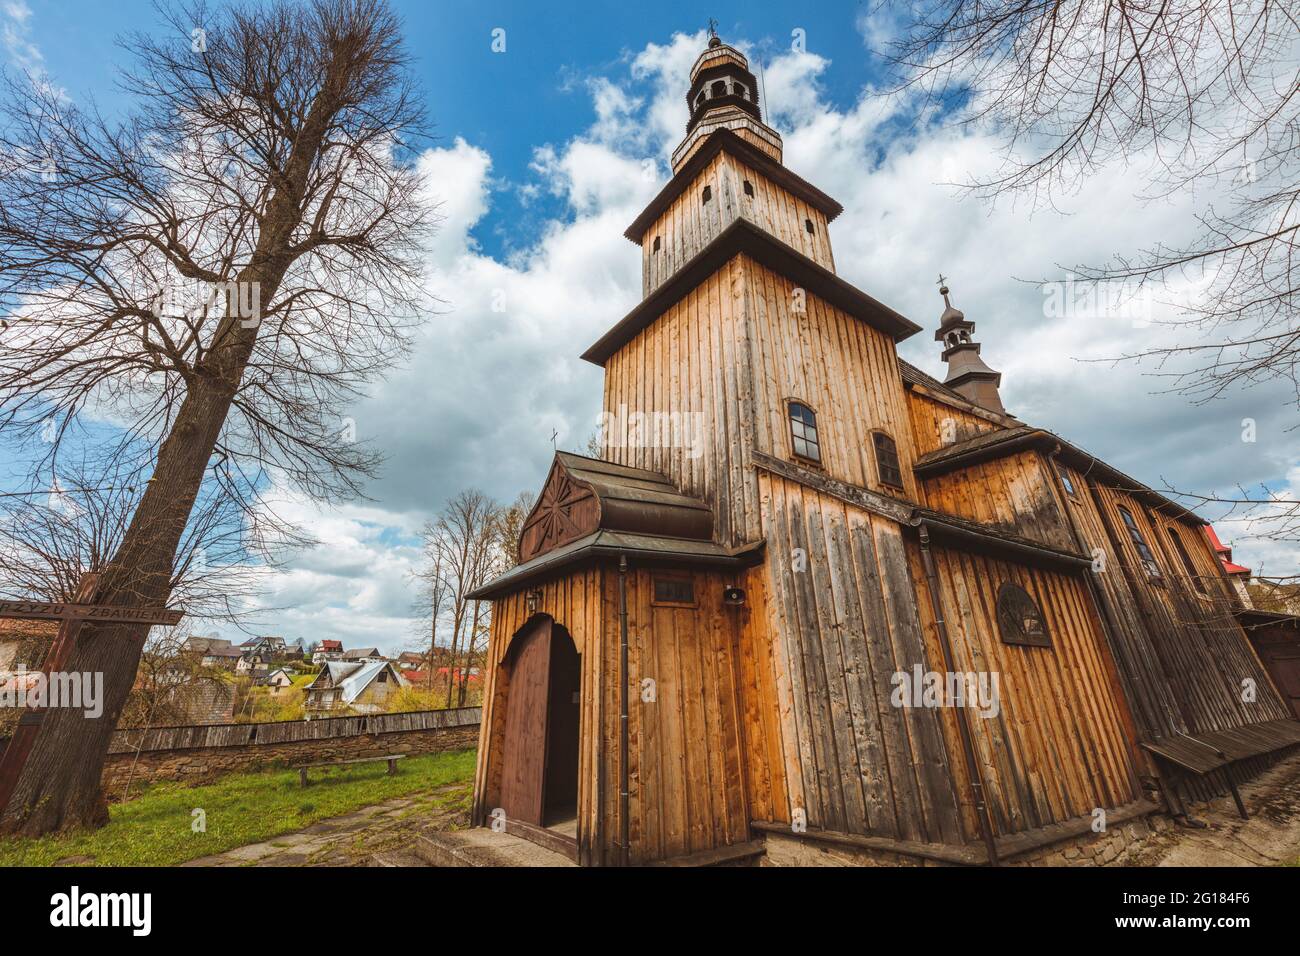 Iglesia de madera en Kasina Wielka. Polonia menor, Polonia. Foto de stock